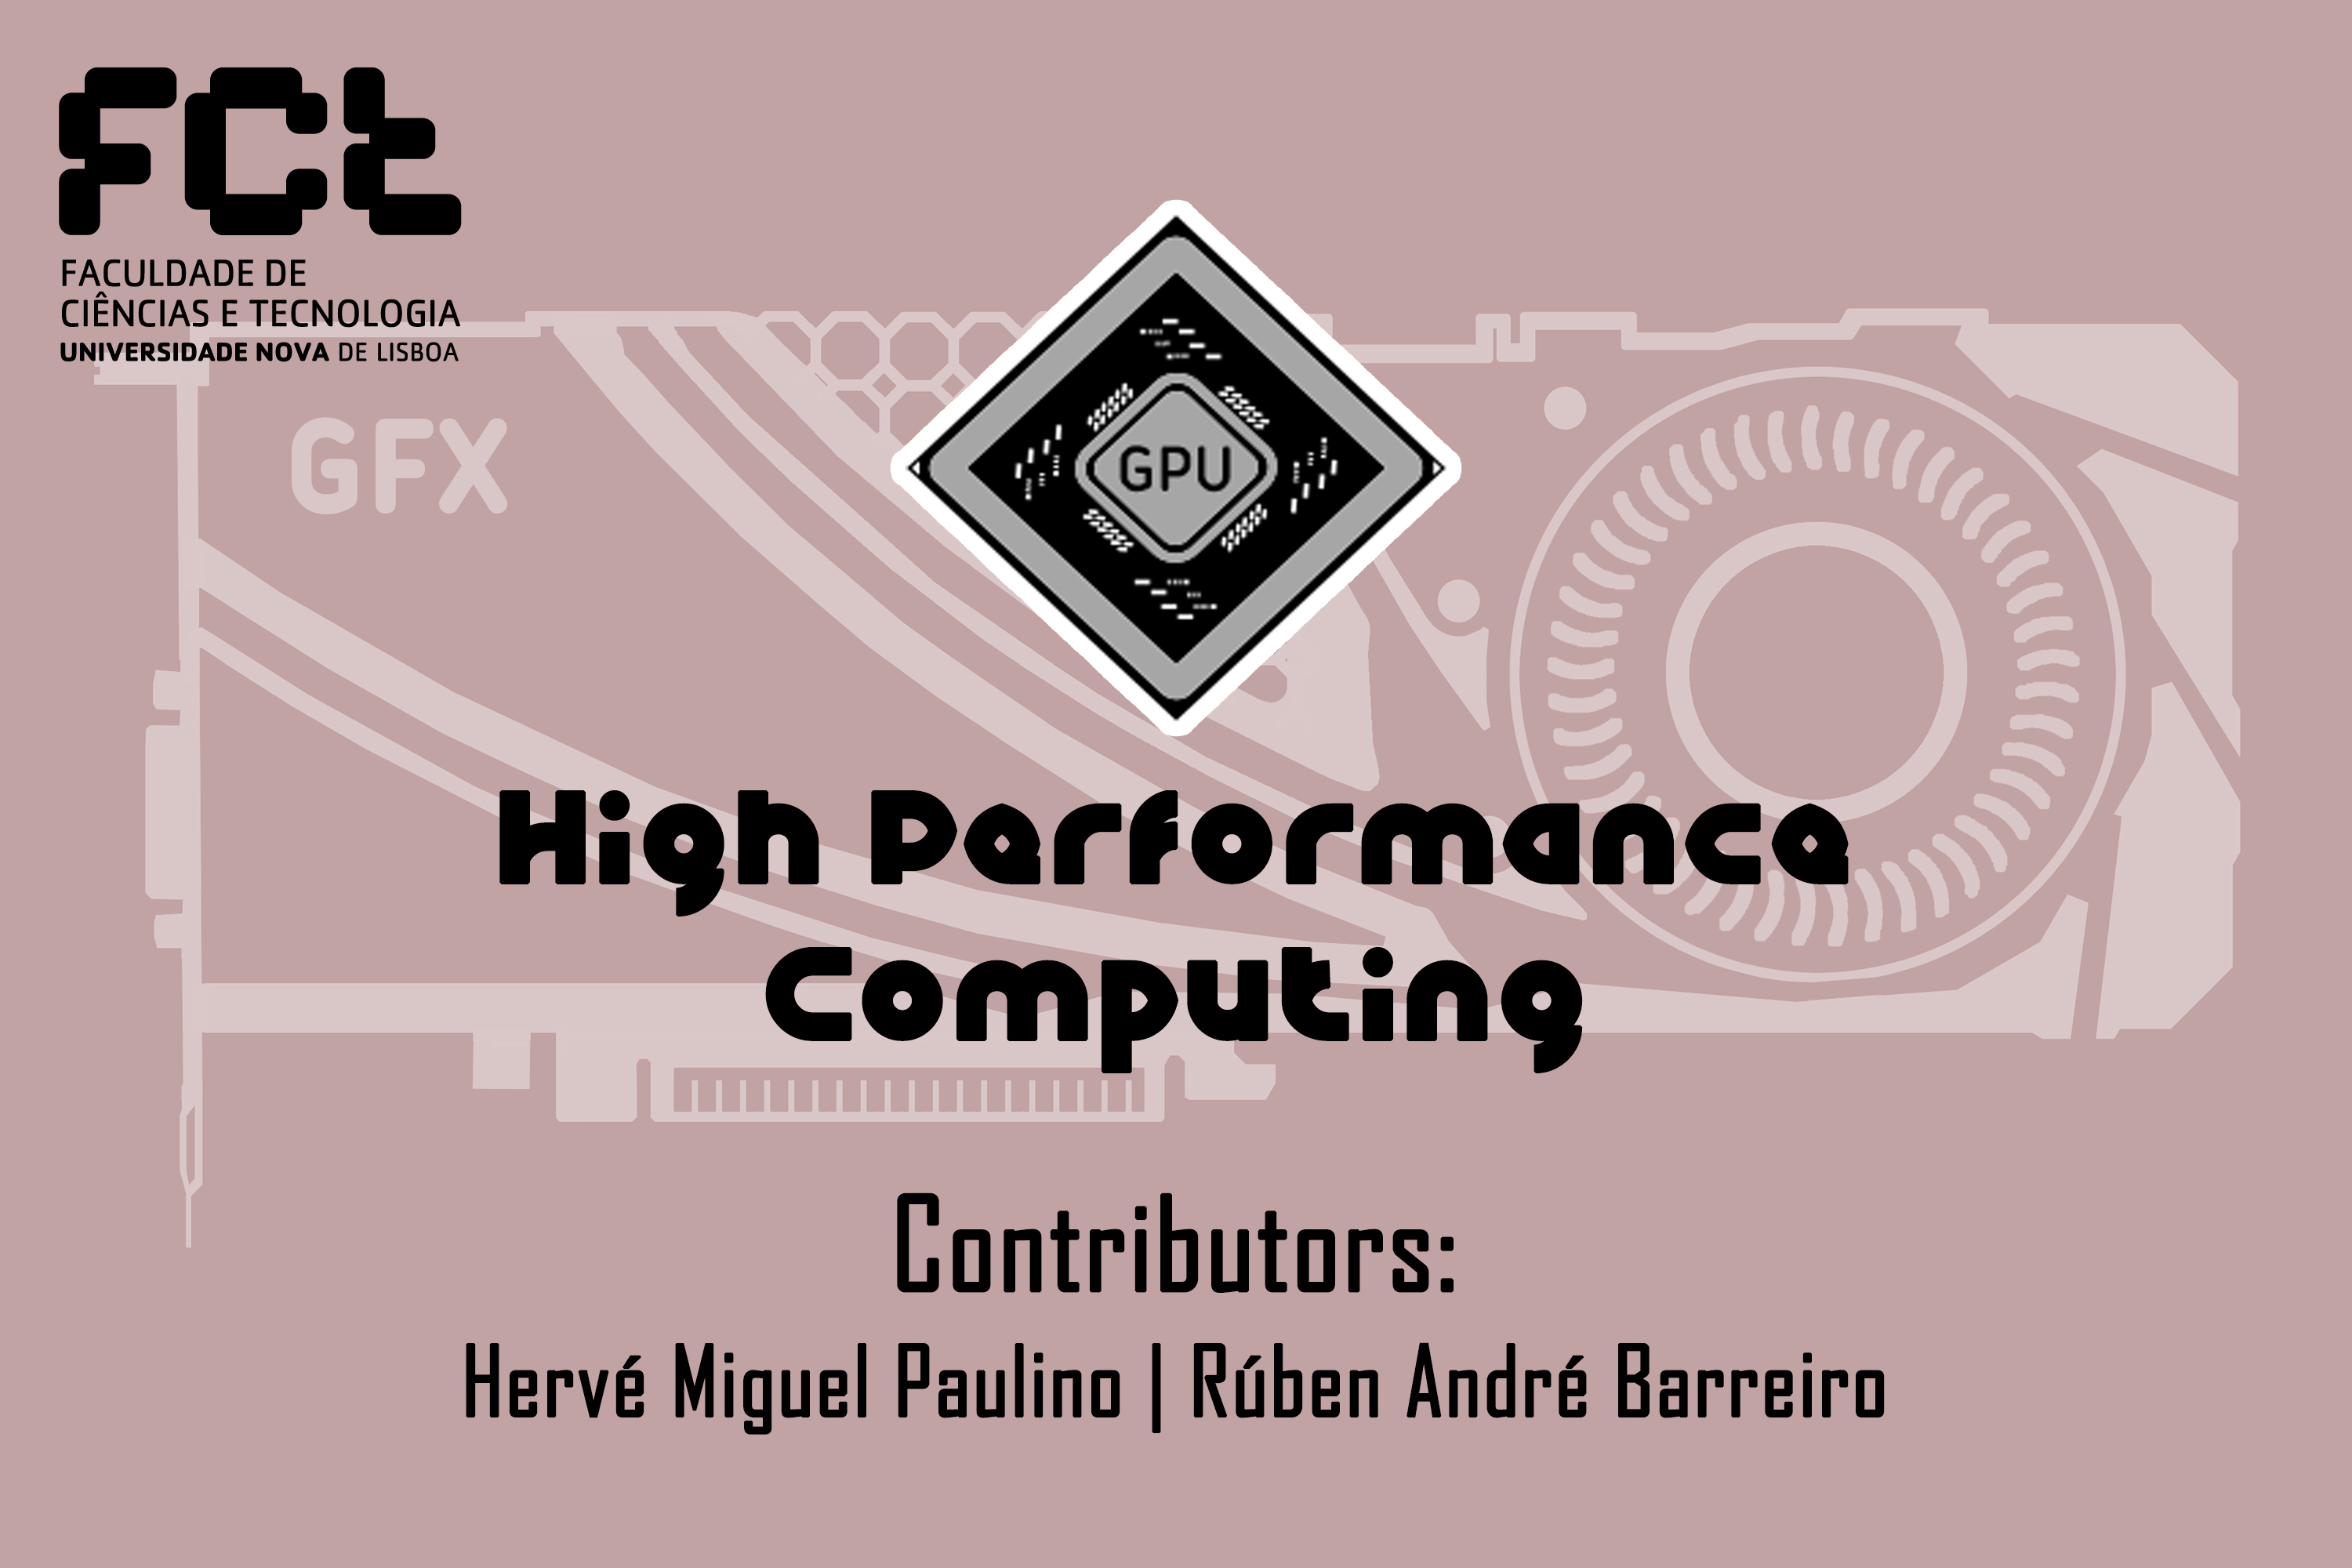 https://raw.githubusercontent.com/rubenandrebarreiro/fct-nova-high-performance-computing-labs-part-1/master/imgs/JPGs/banner-1.jpg